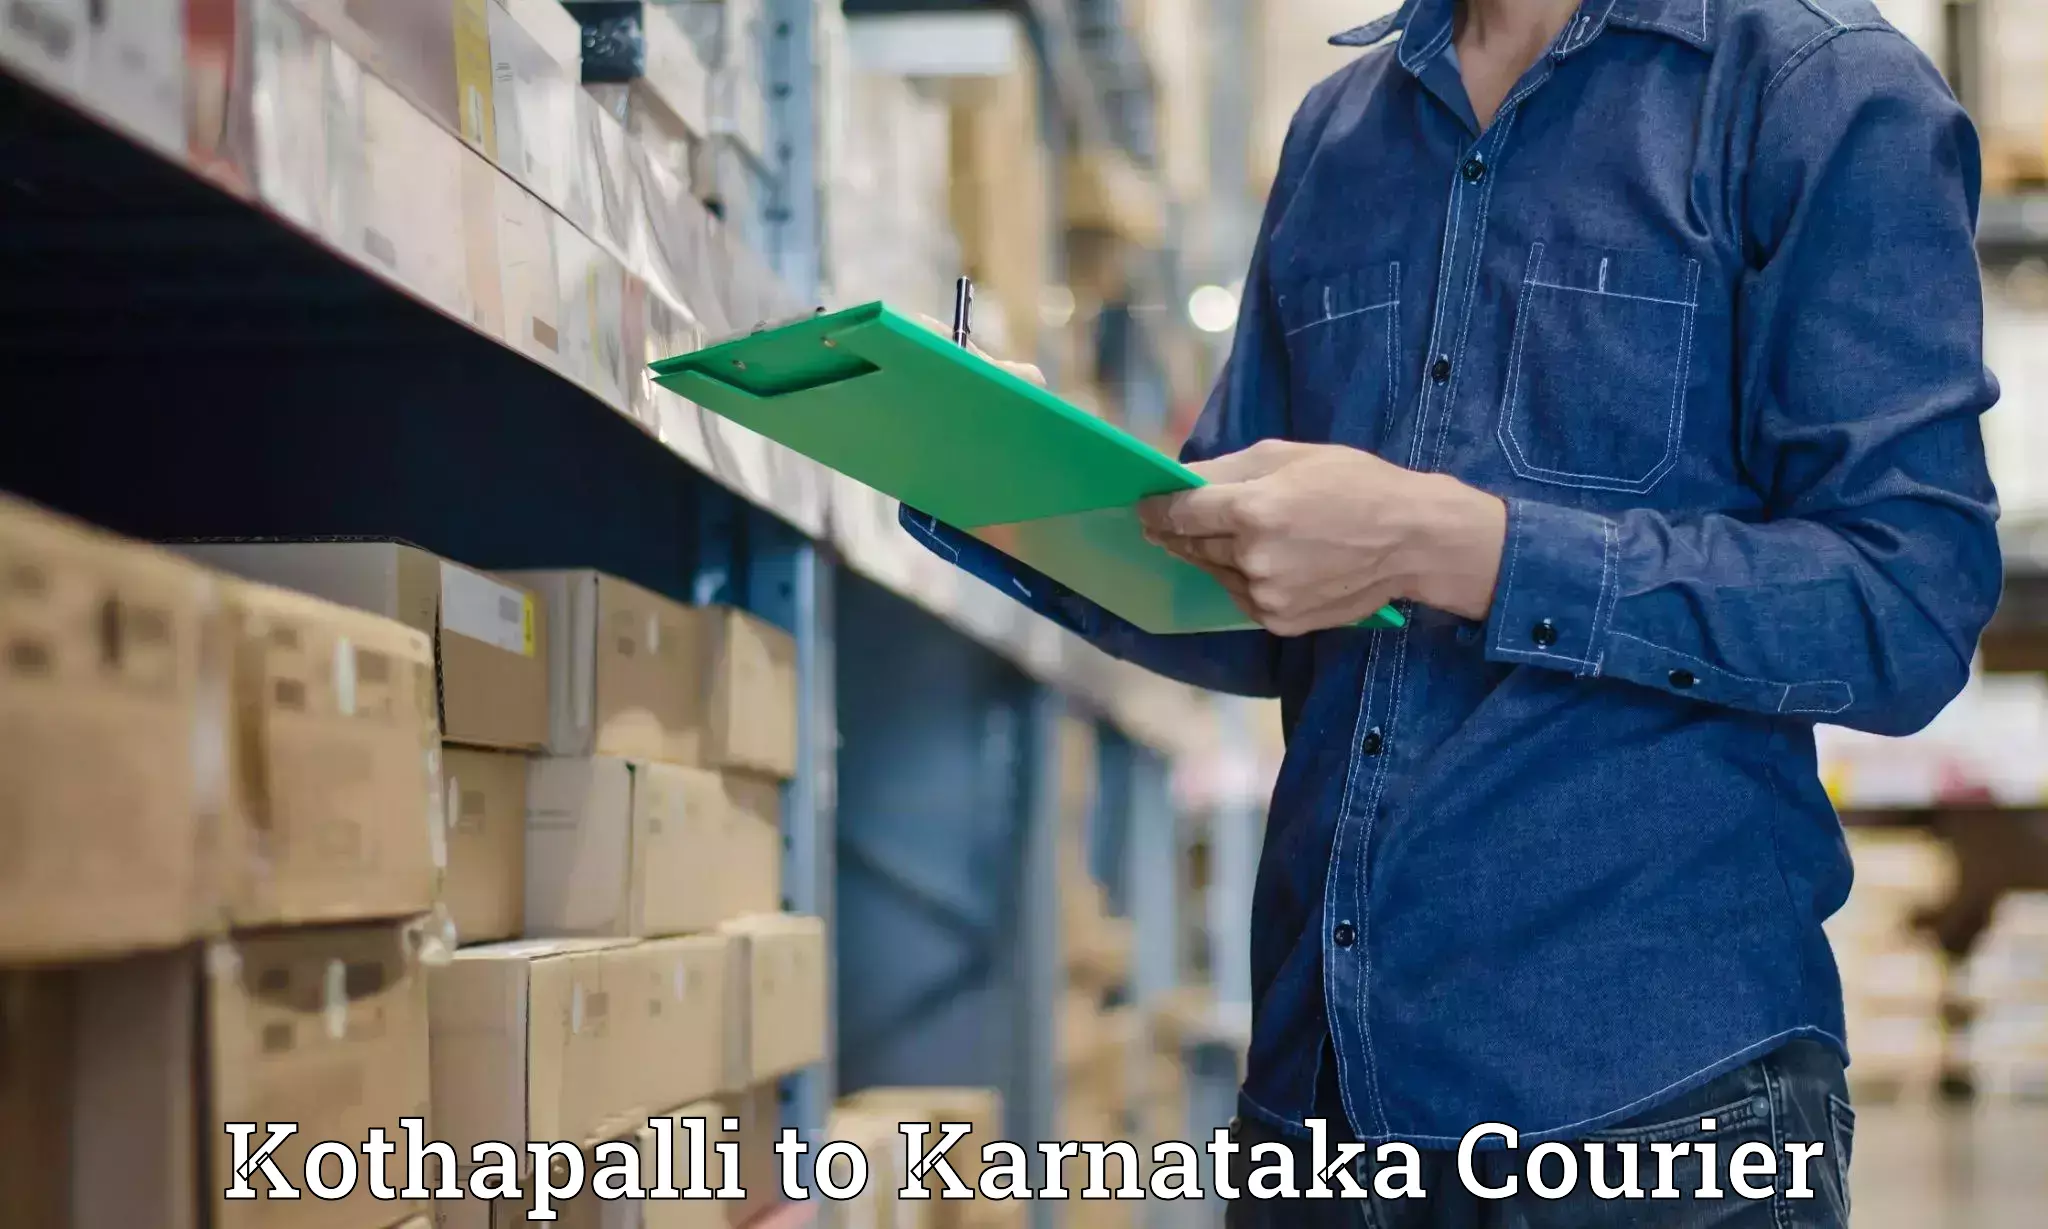 Professional courier handling Kothapalli to Yaragatti